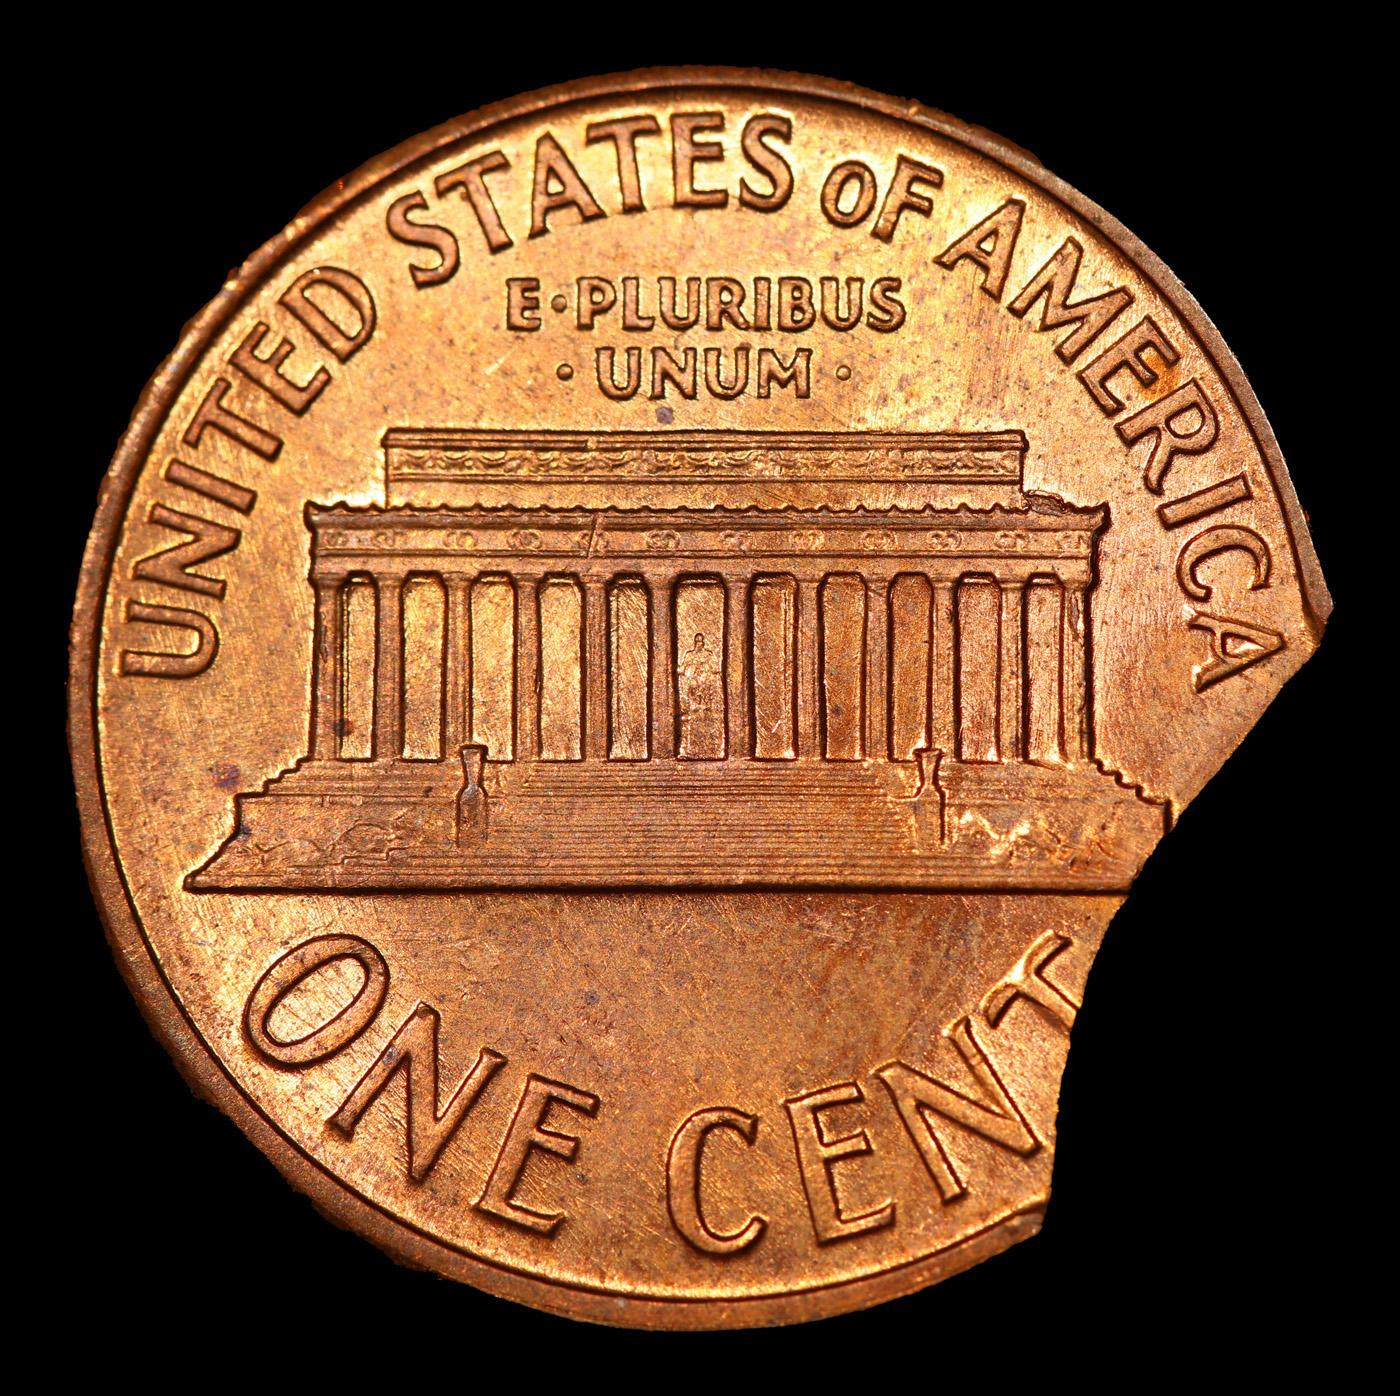 1959-d Lincoln Cent Mint Error 1c Grades GEM Unc RD